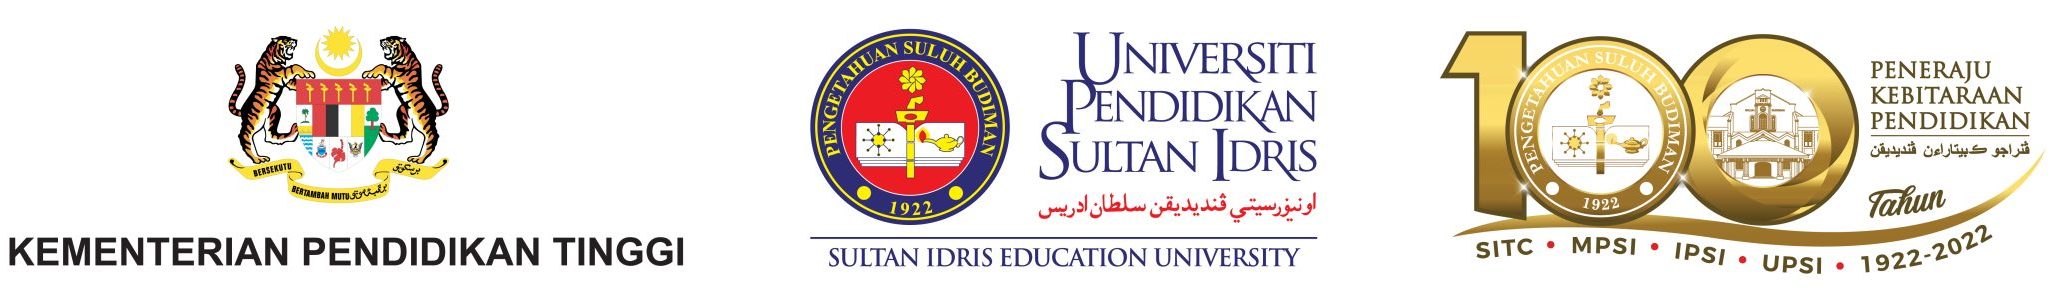 UPSI | Portal Rasmi Universiti Pendidikan Sultan Idris